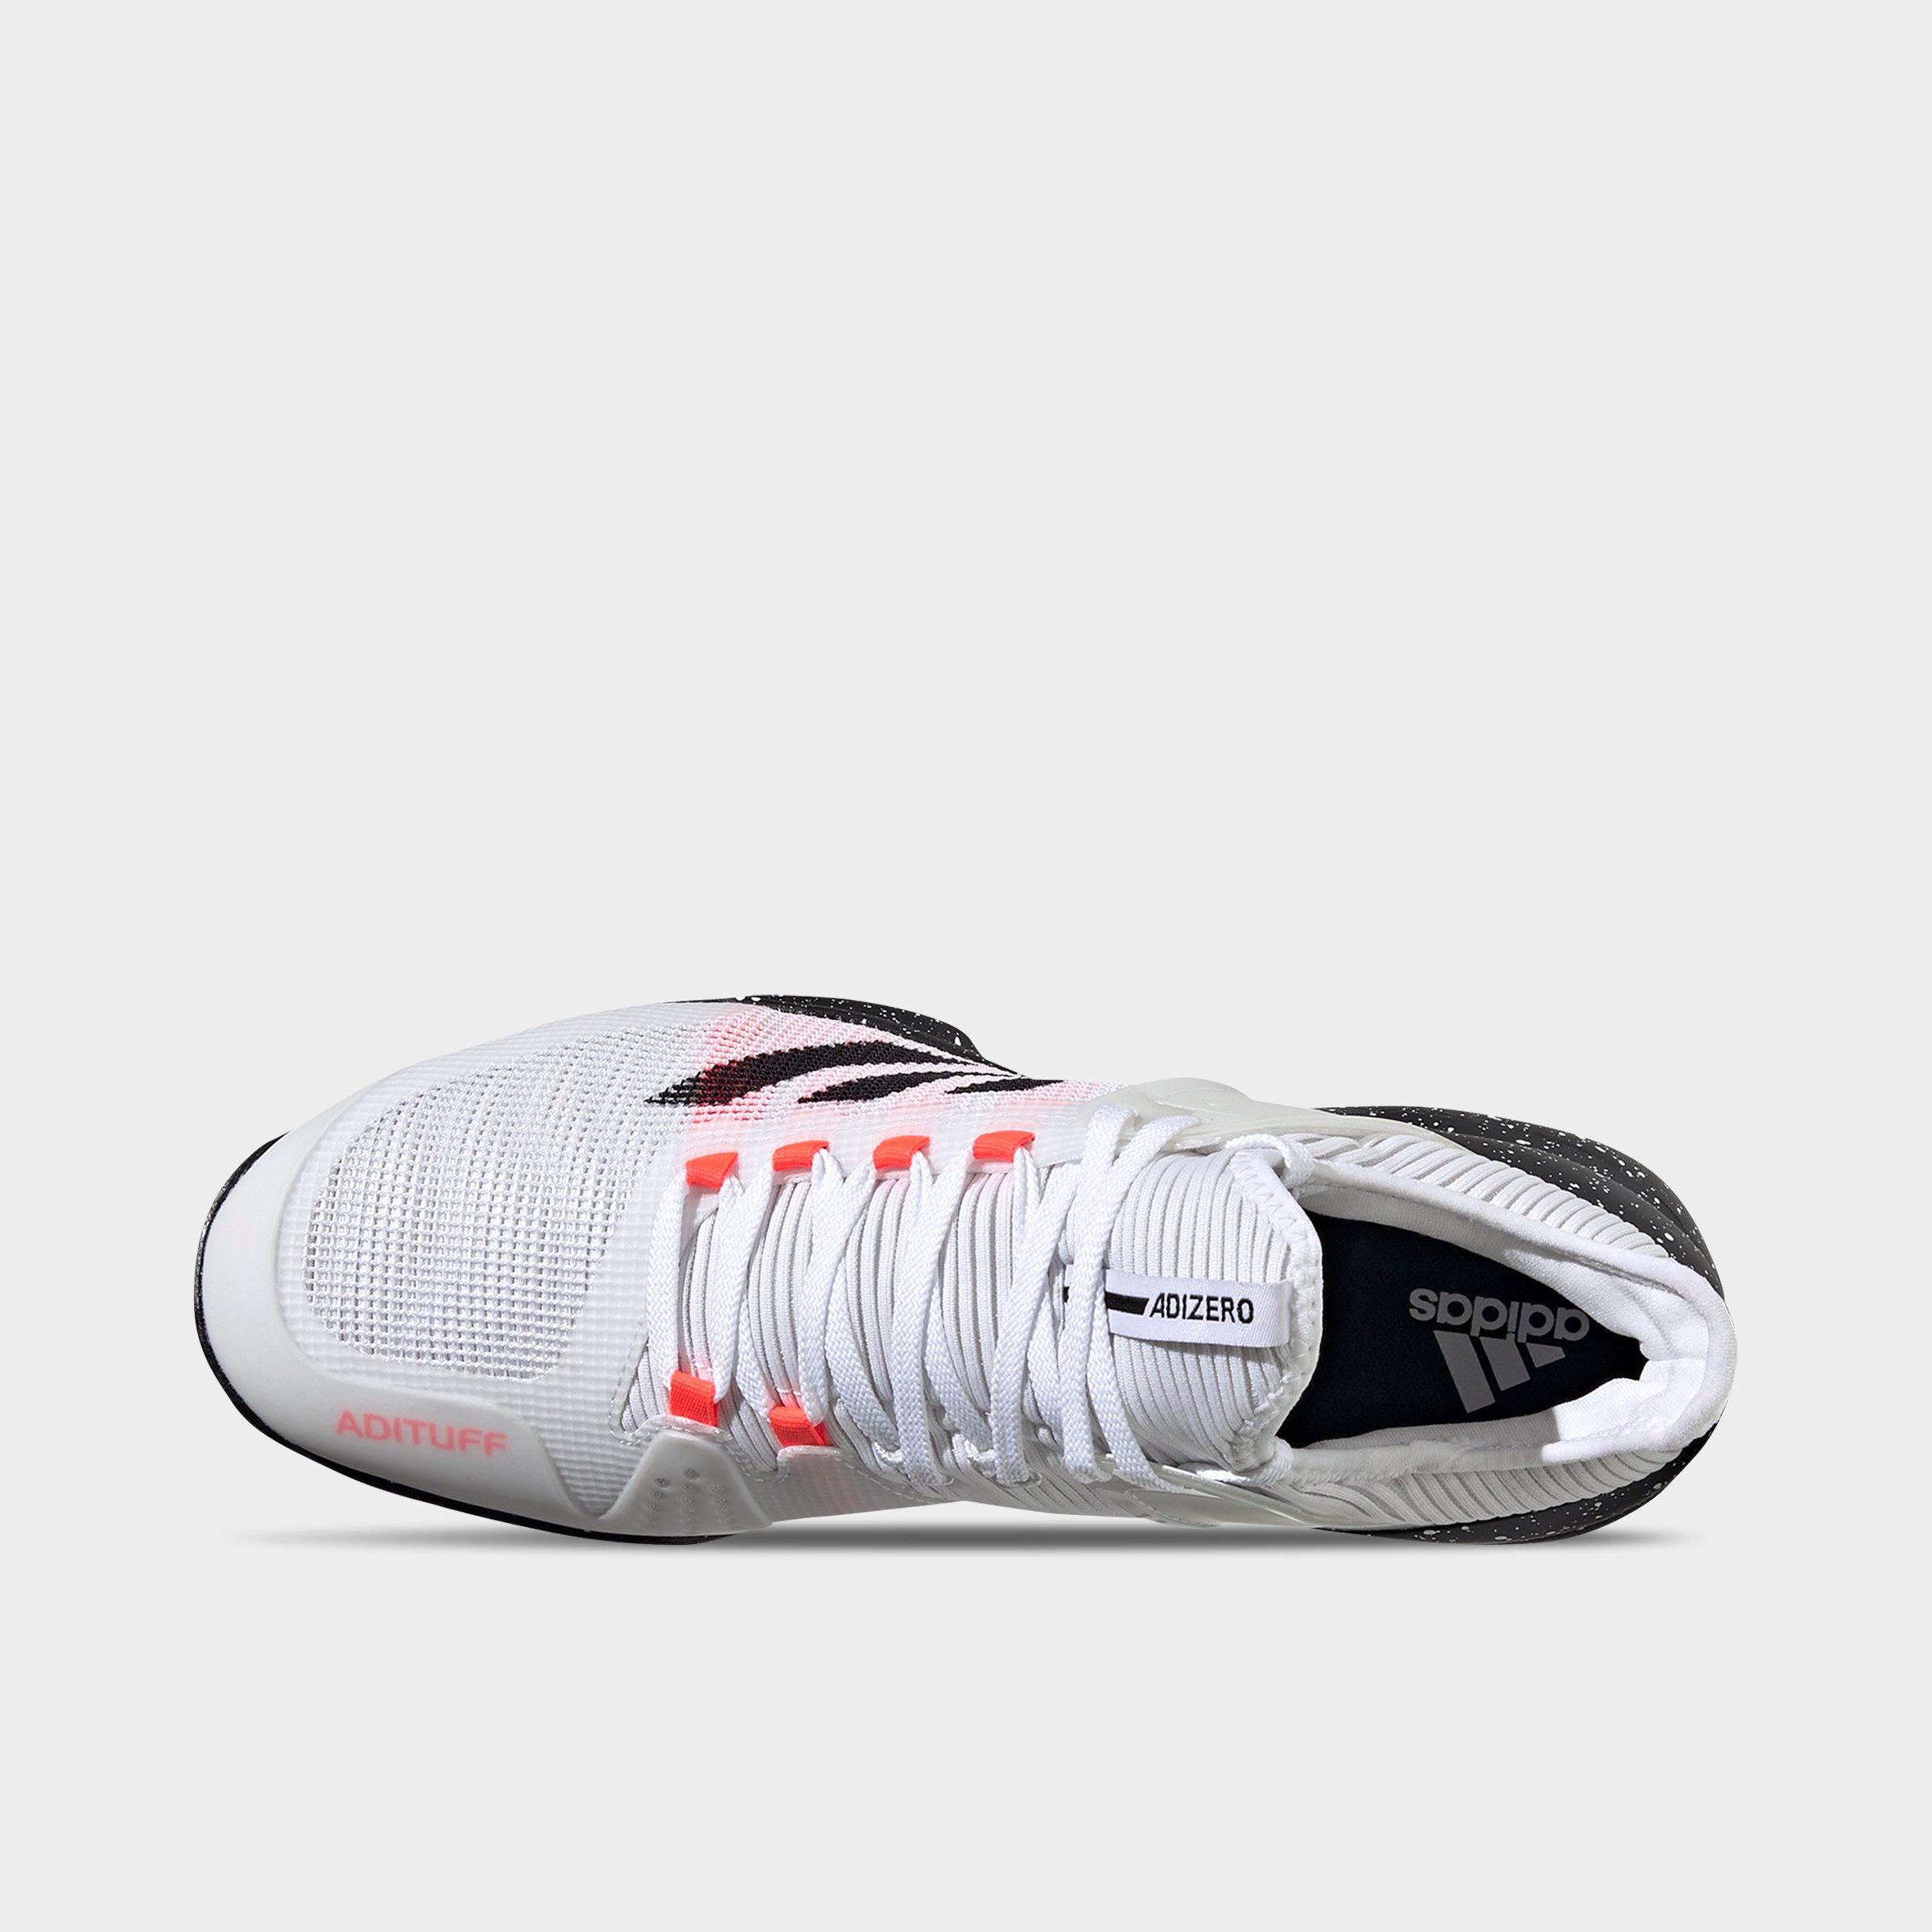 adidas hard court tennis shoes